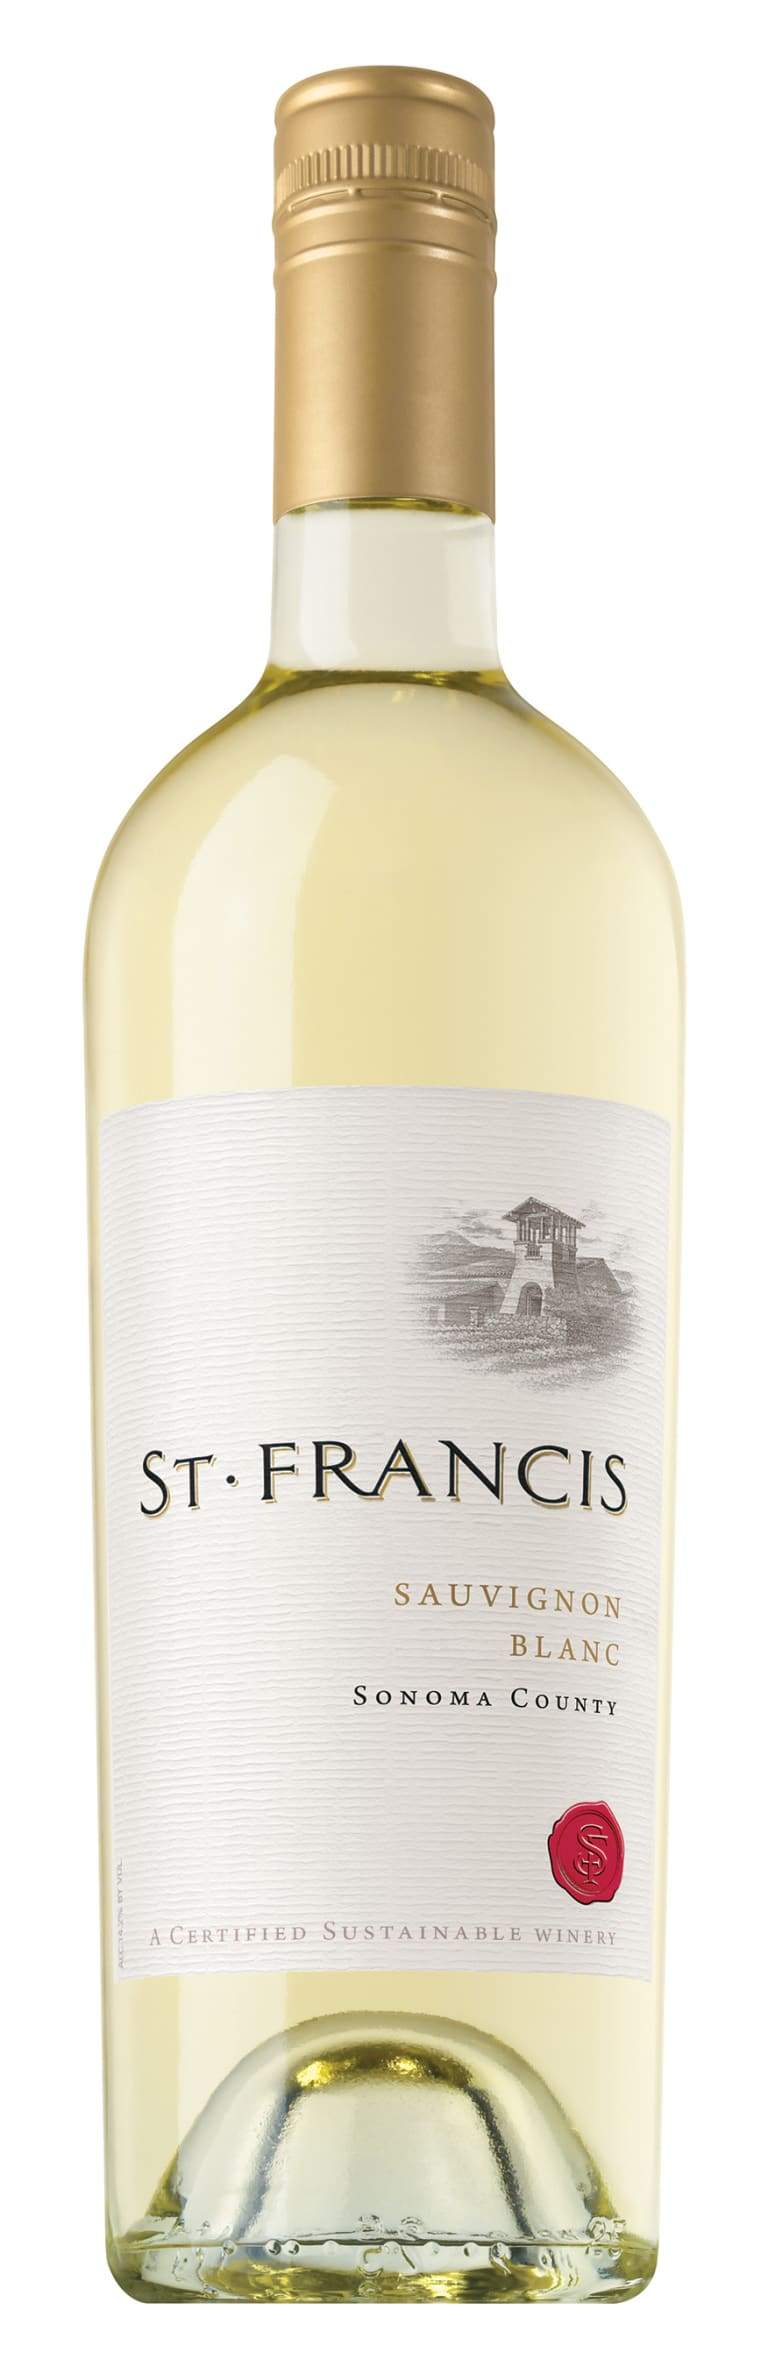 St. Francis Sauvignon Blanc 2018